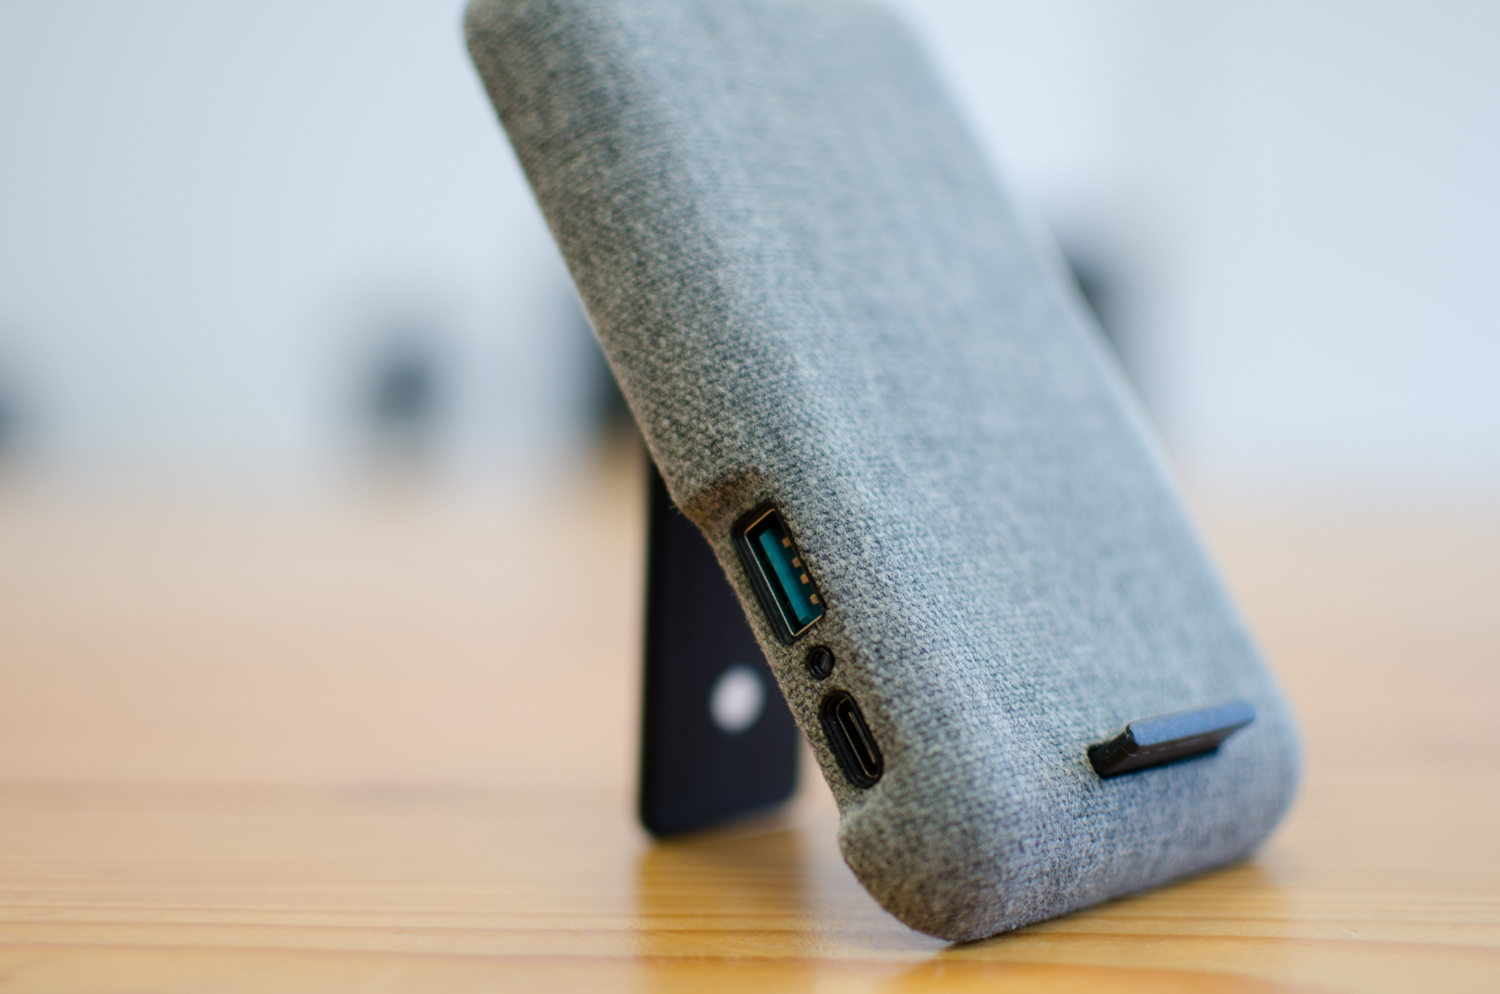 nimble eco friendly battery packs wireless charging pads